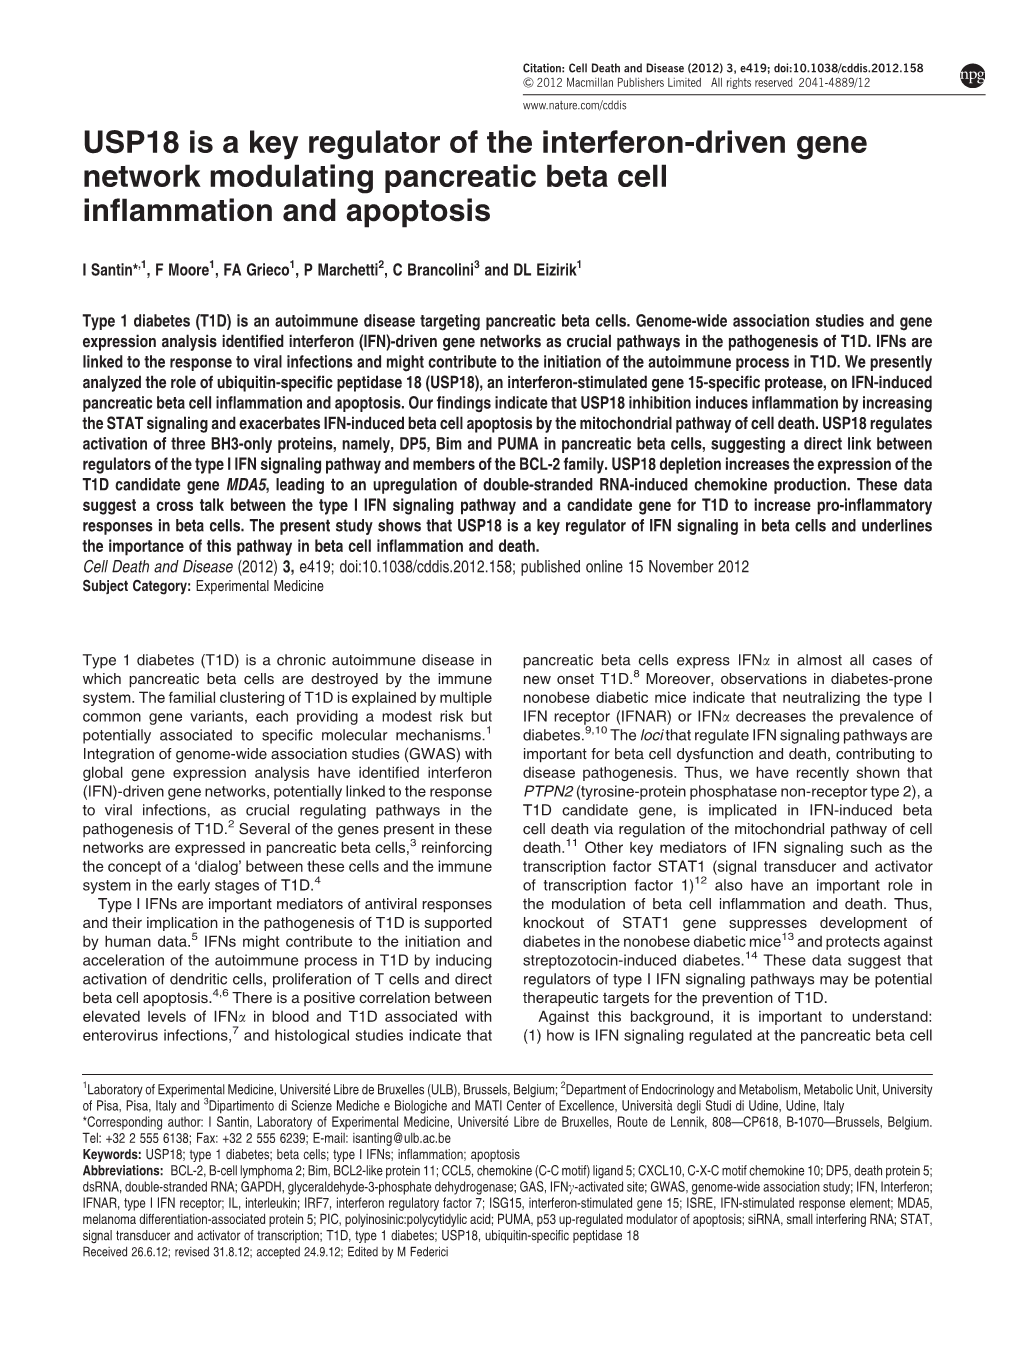 USP18 Is a Key Regulator of the Interferon-Driven Gene Network Modulating Pancreatic Beta Cell Inﬂammation and Apoptosis